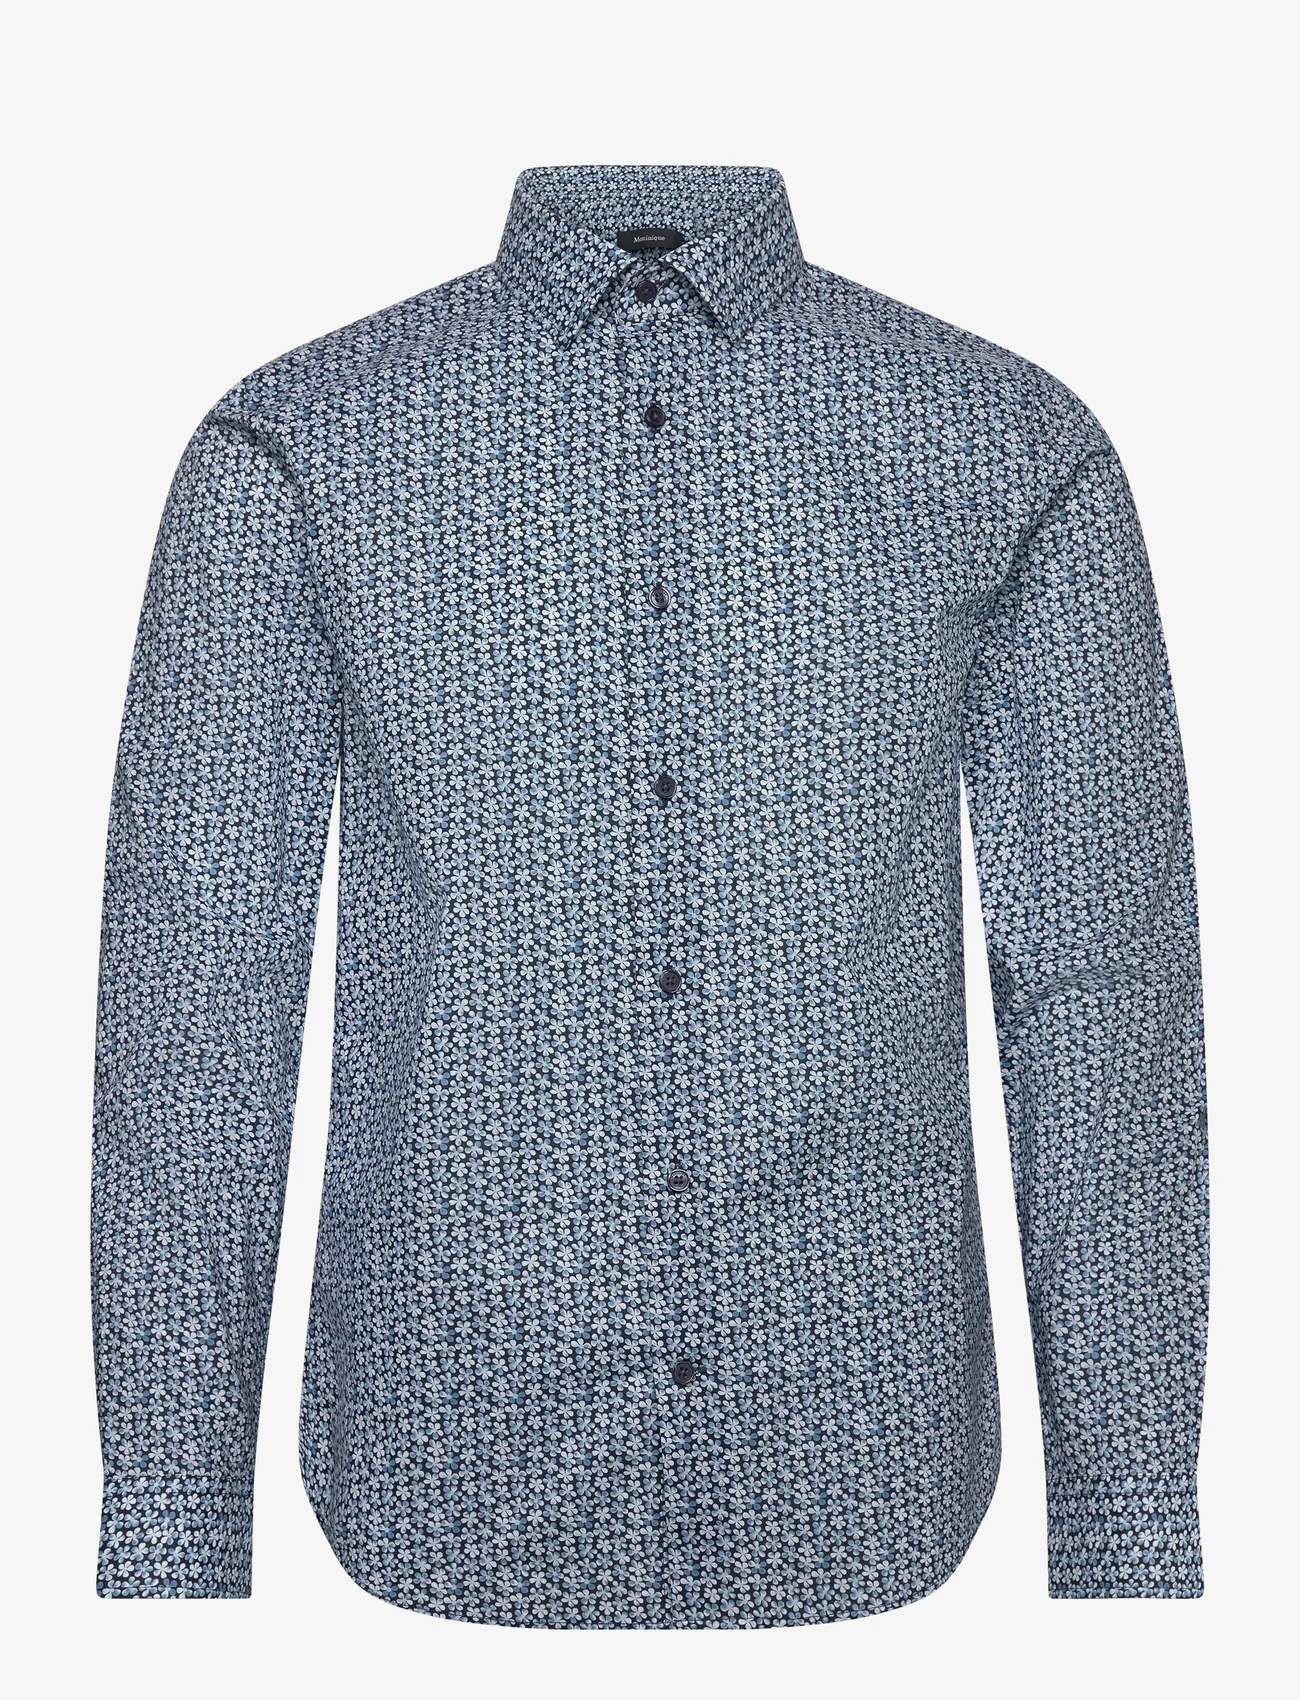 Matinique - MAtrostol BN - business skjorter - insignia blue - 0